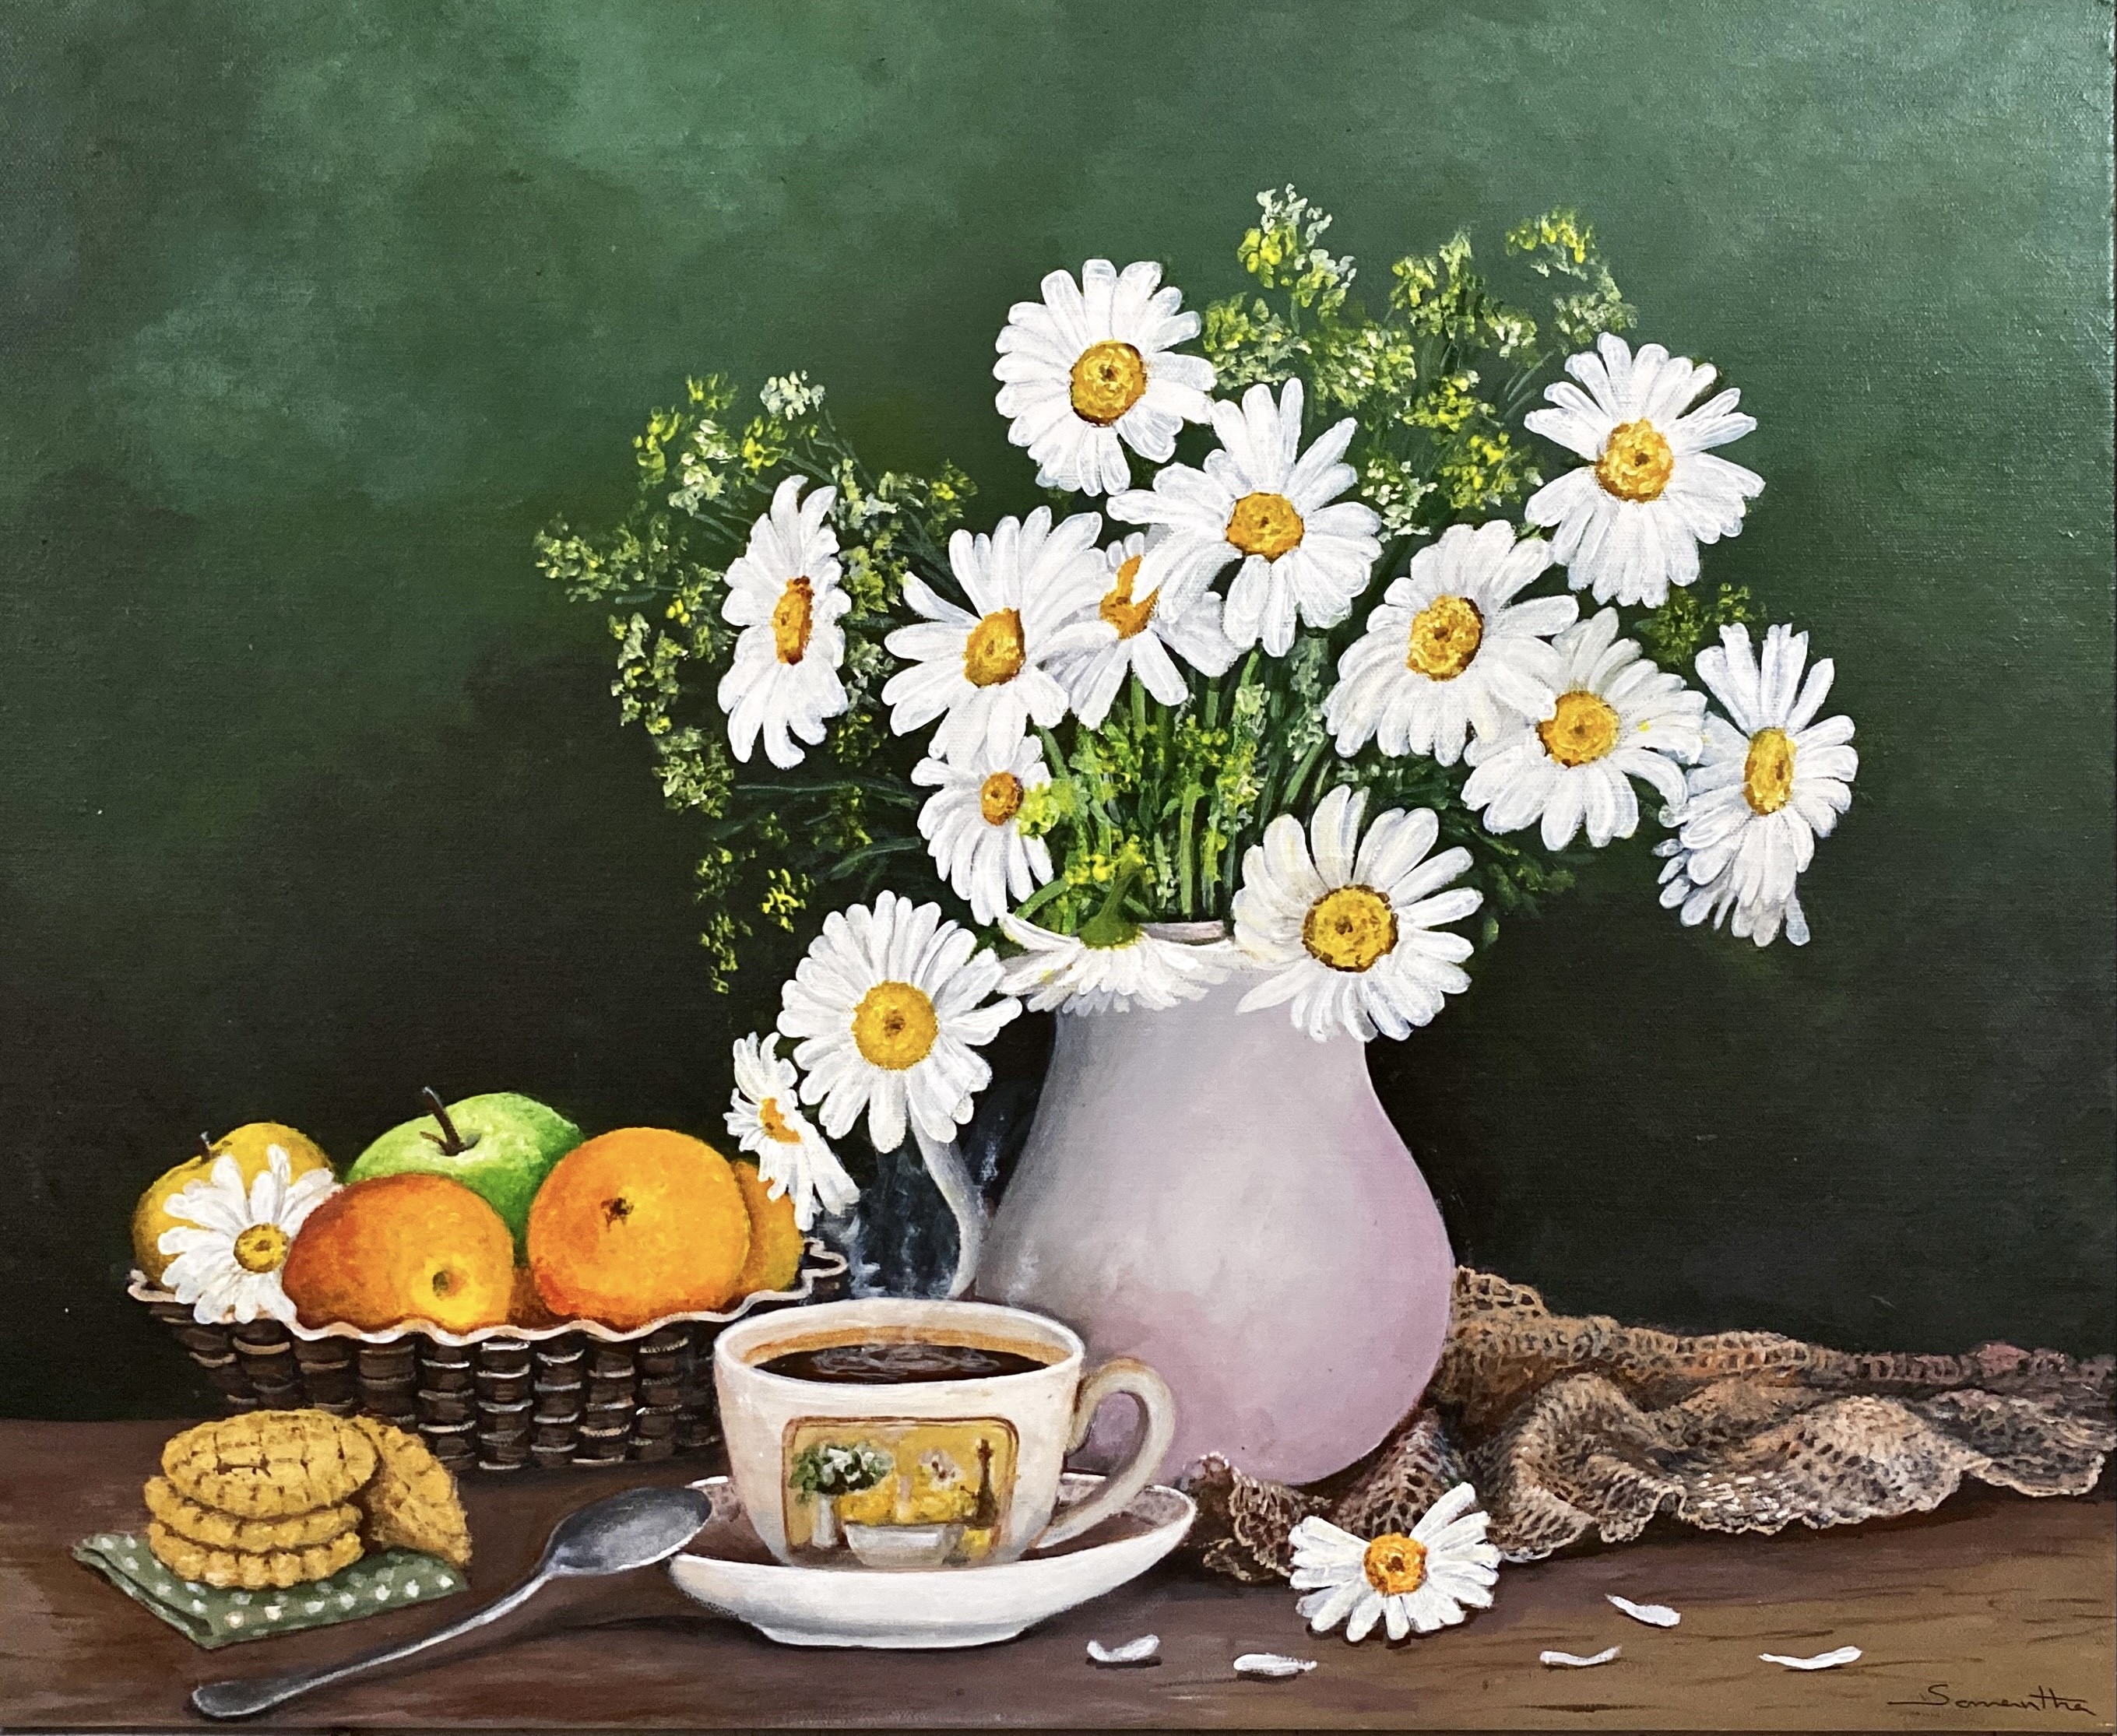 Flower basket and fruits by Samantha Wijesinghe